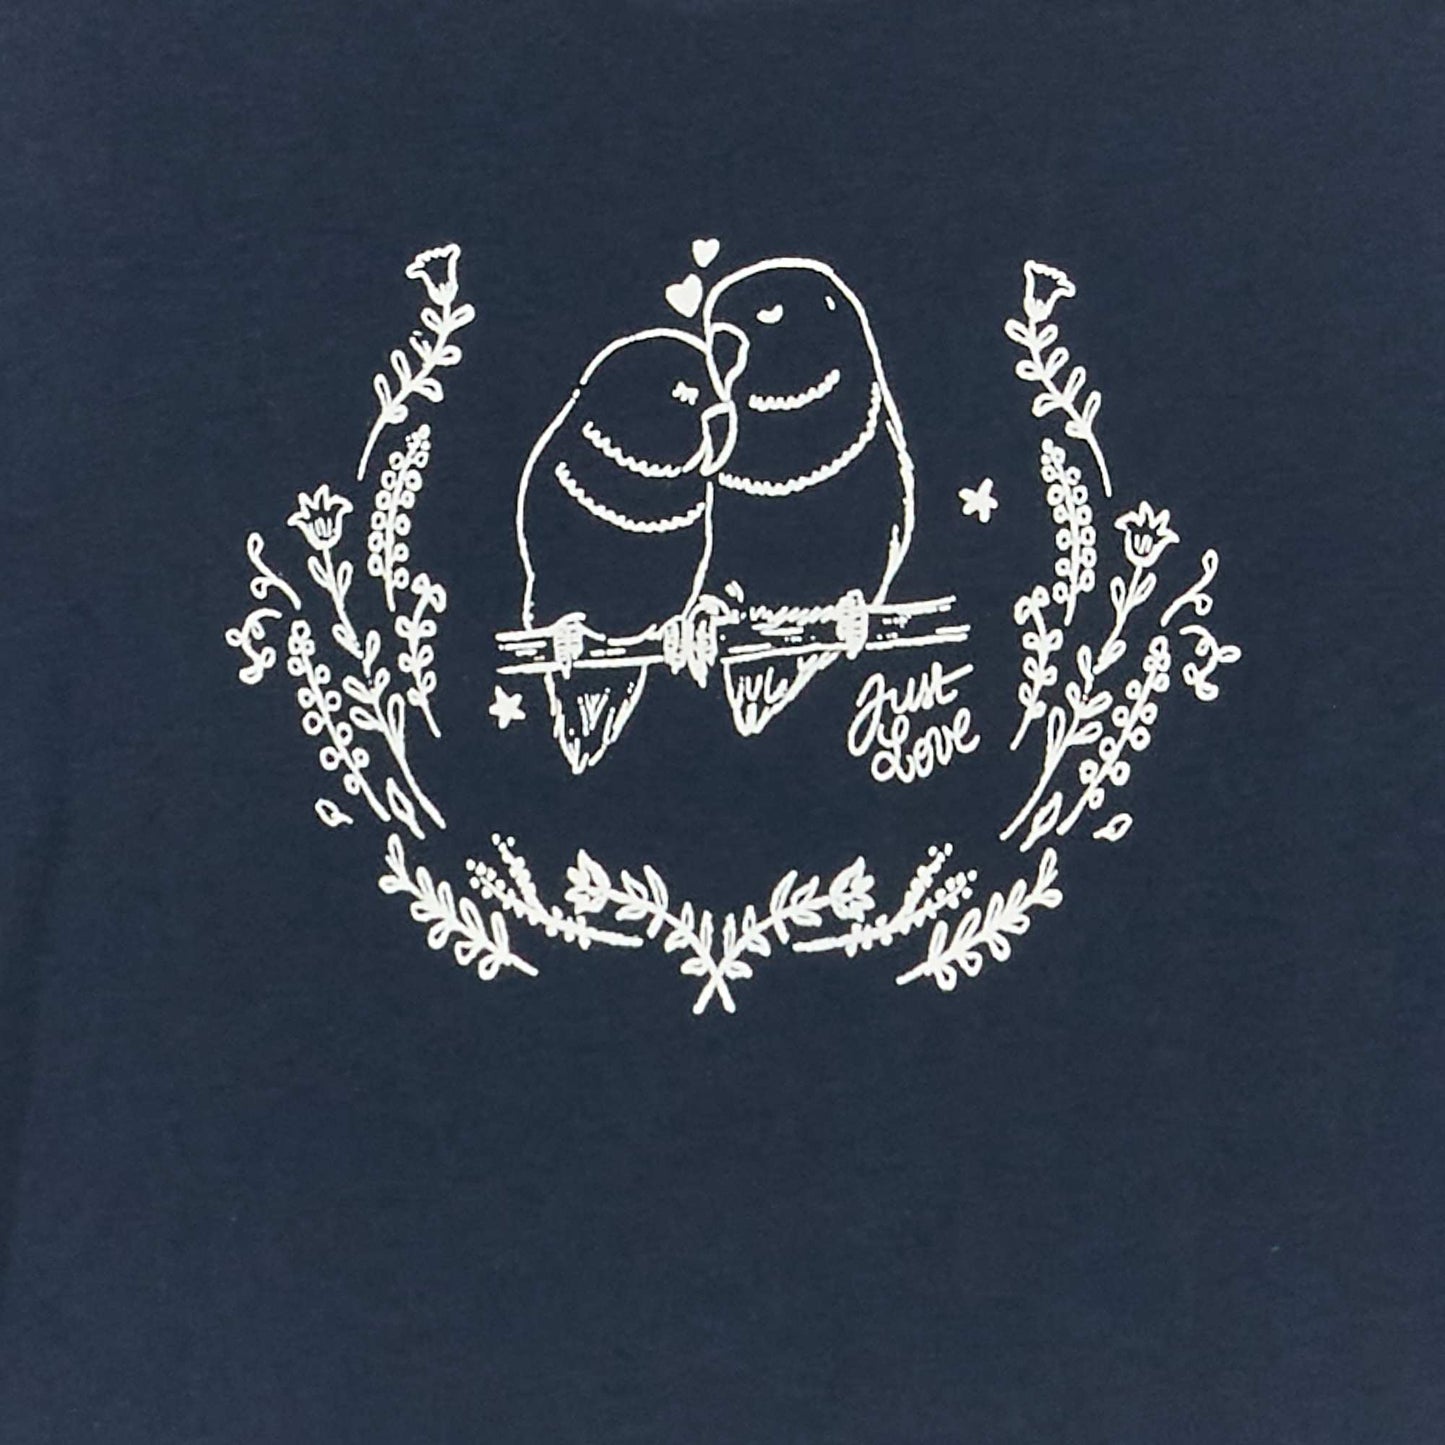 Printed cotton T-shirt BLUE